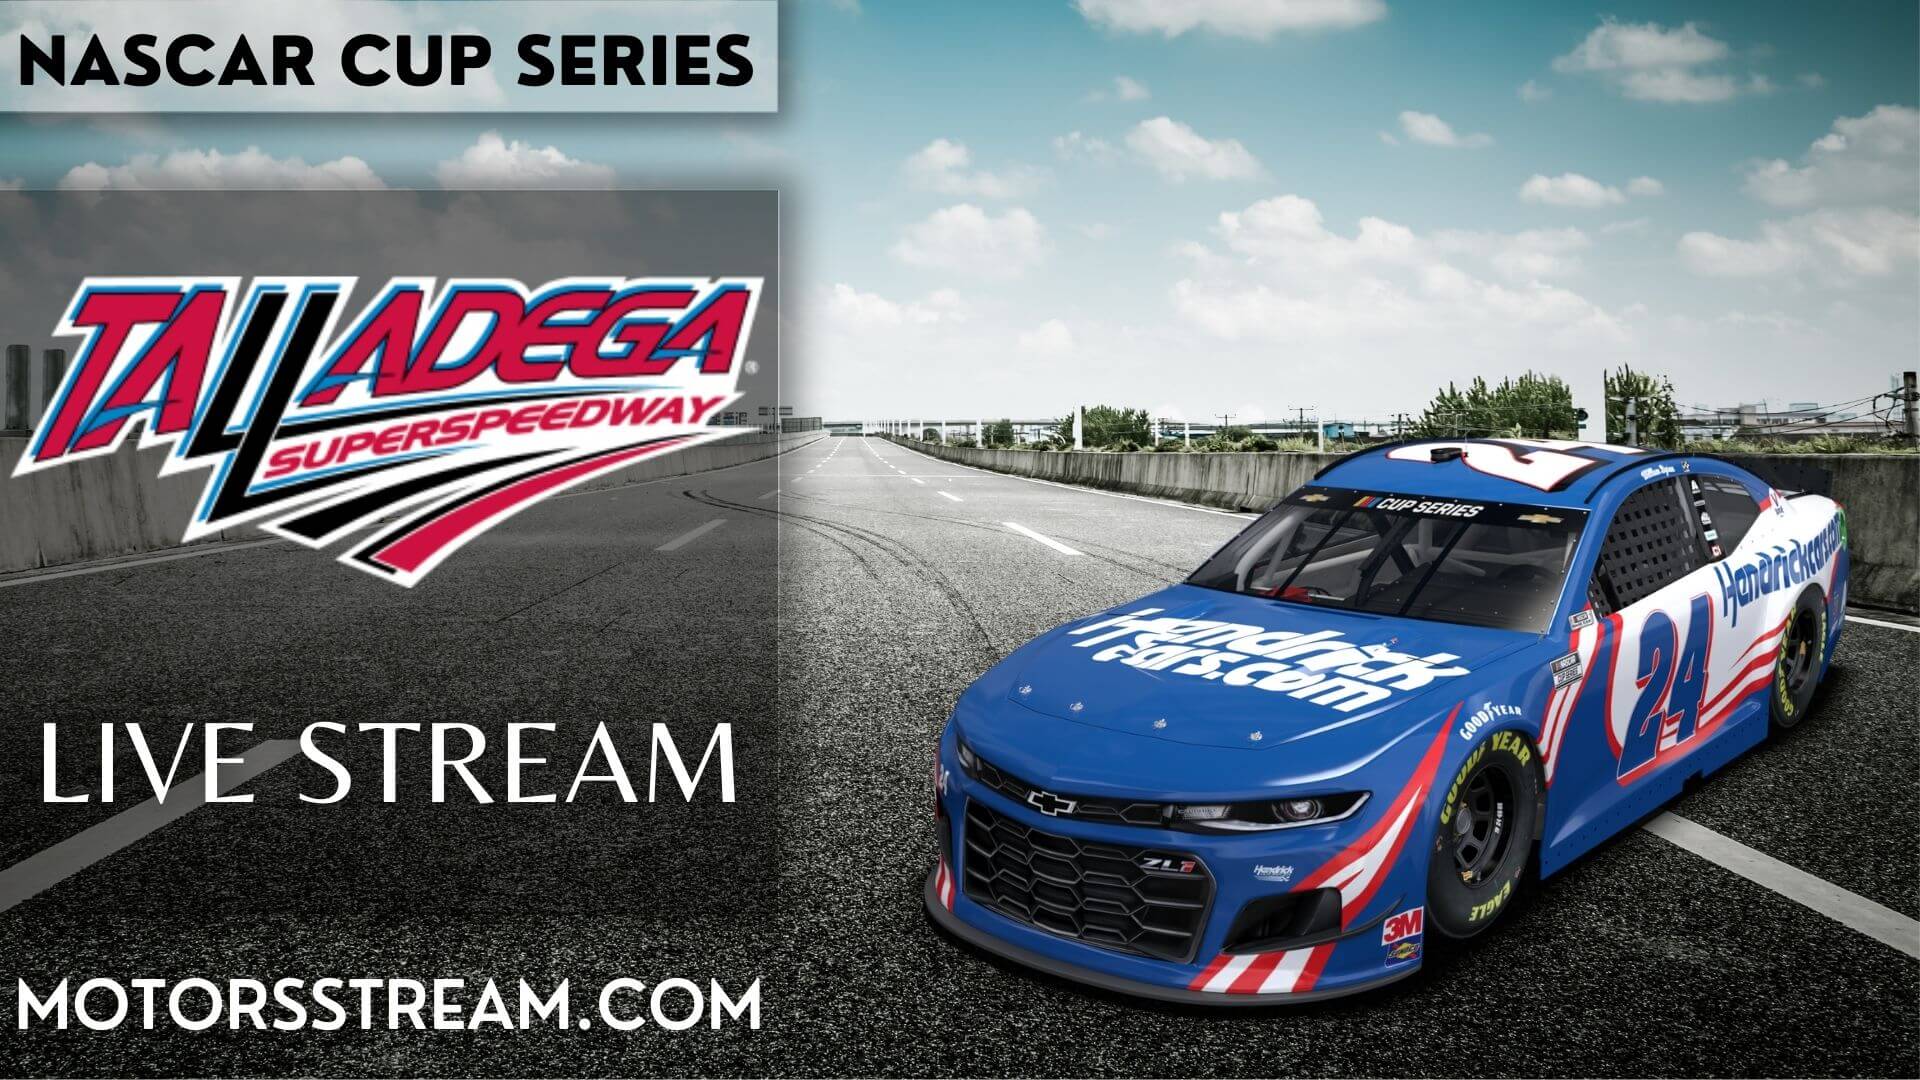 NASCAR Cup GEICO 500 At Talladega 2019 Live Stream